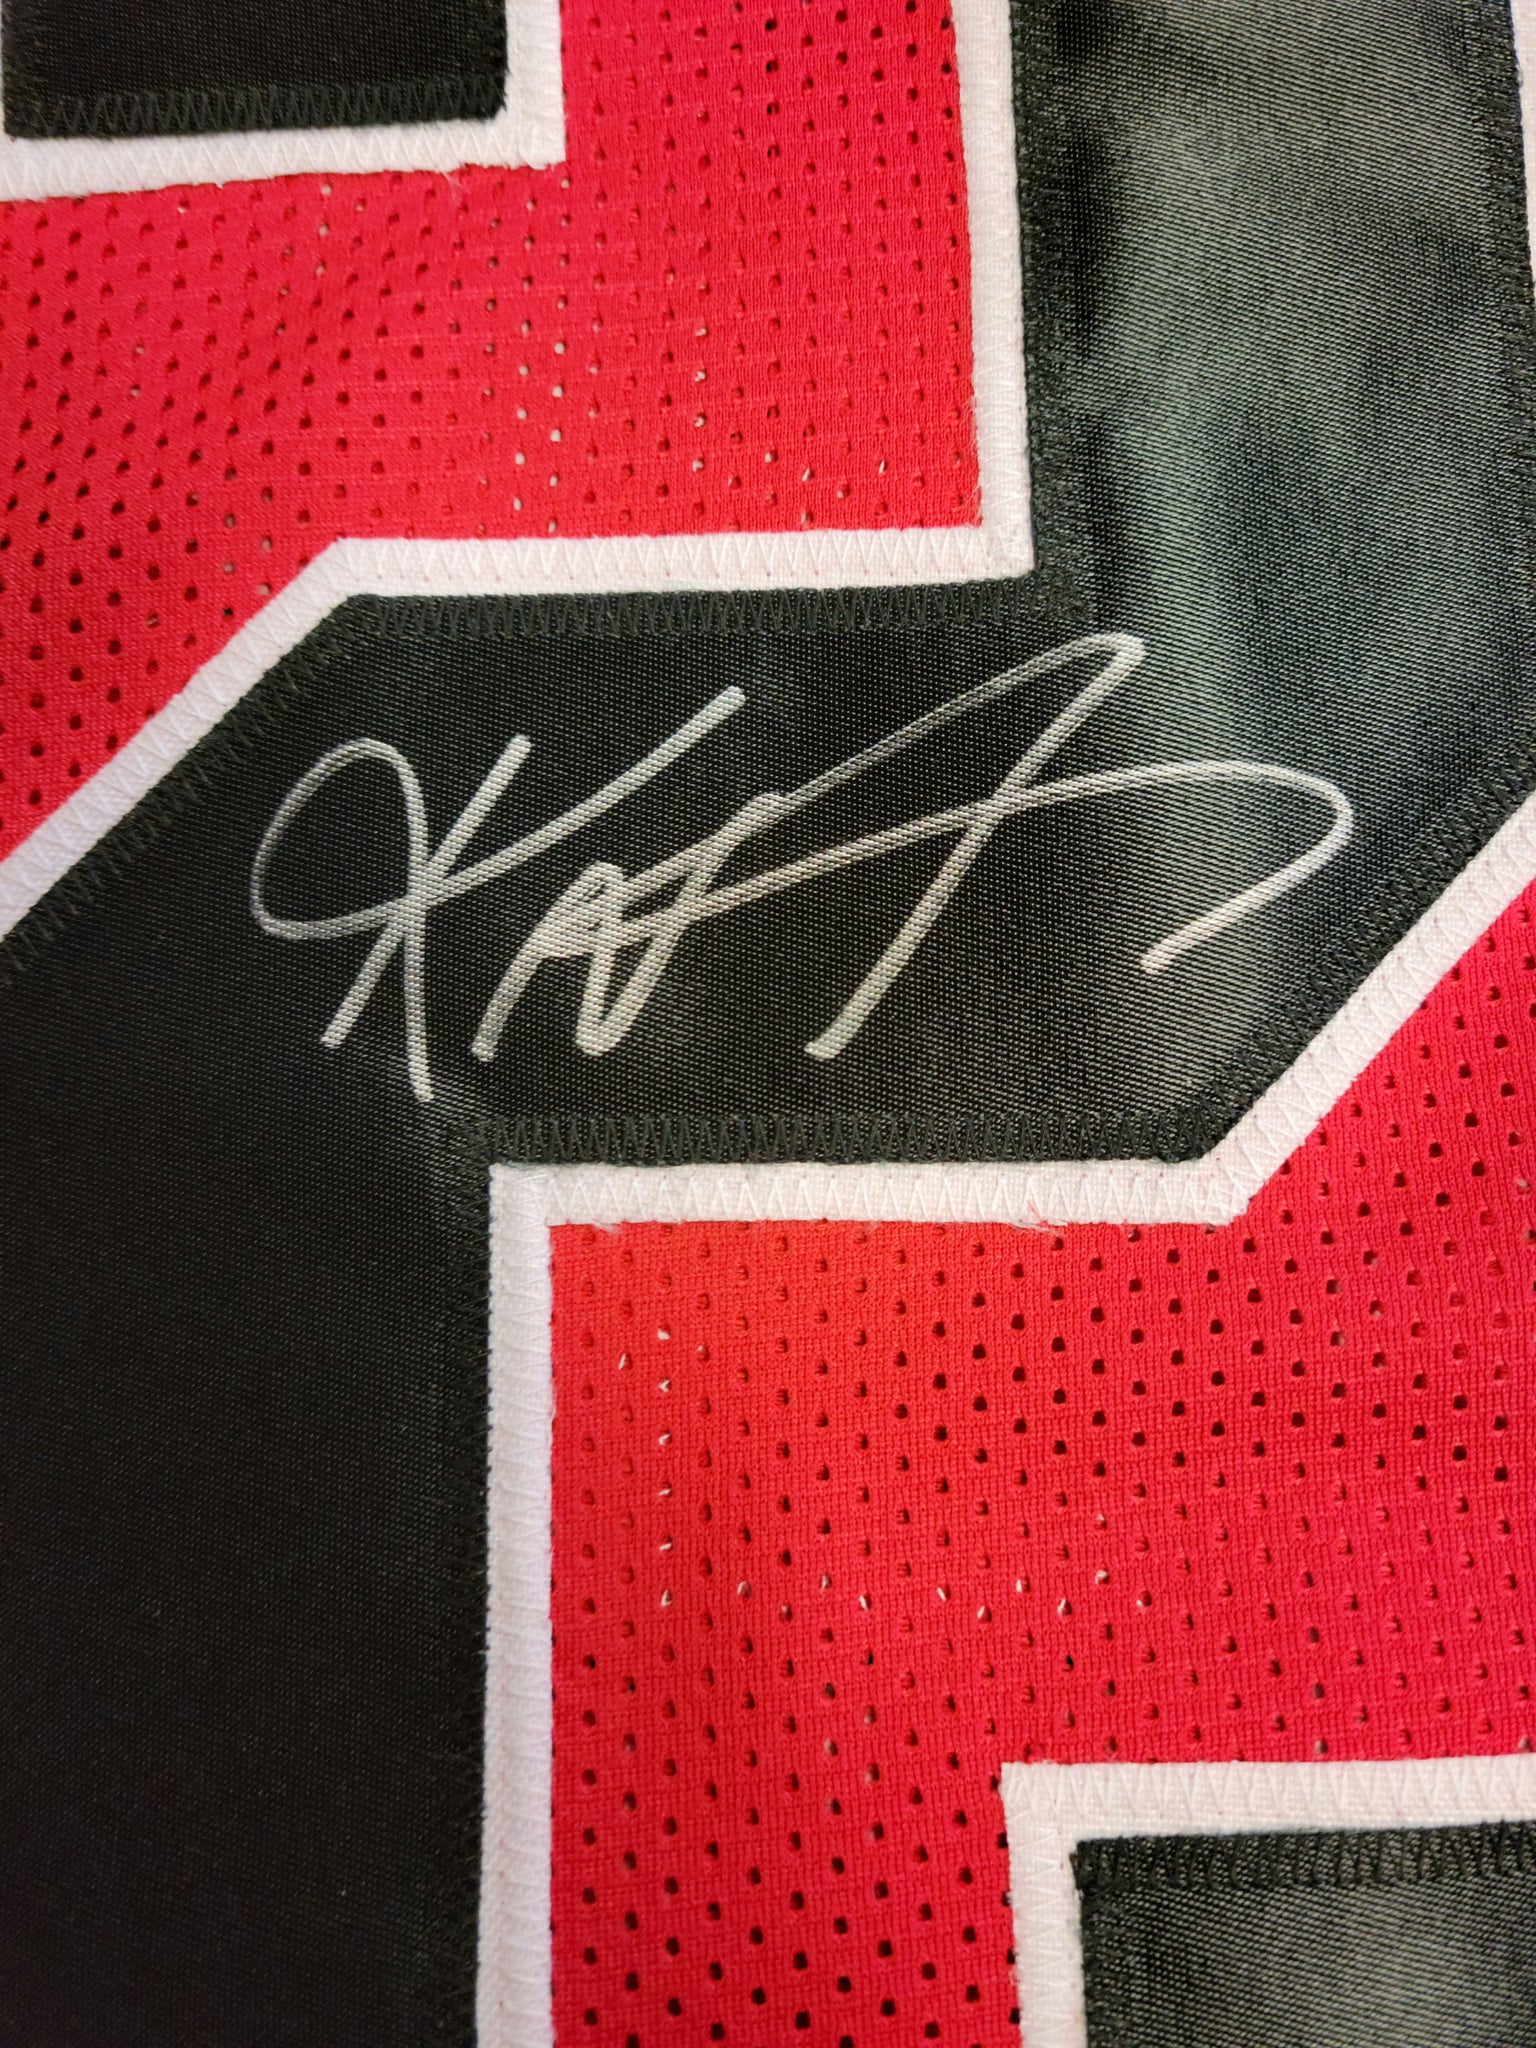 Keanu Neal Authentic Signed Pro Style Jersey Autographed JSA